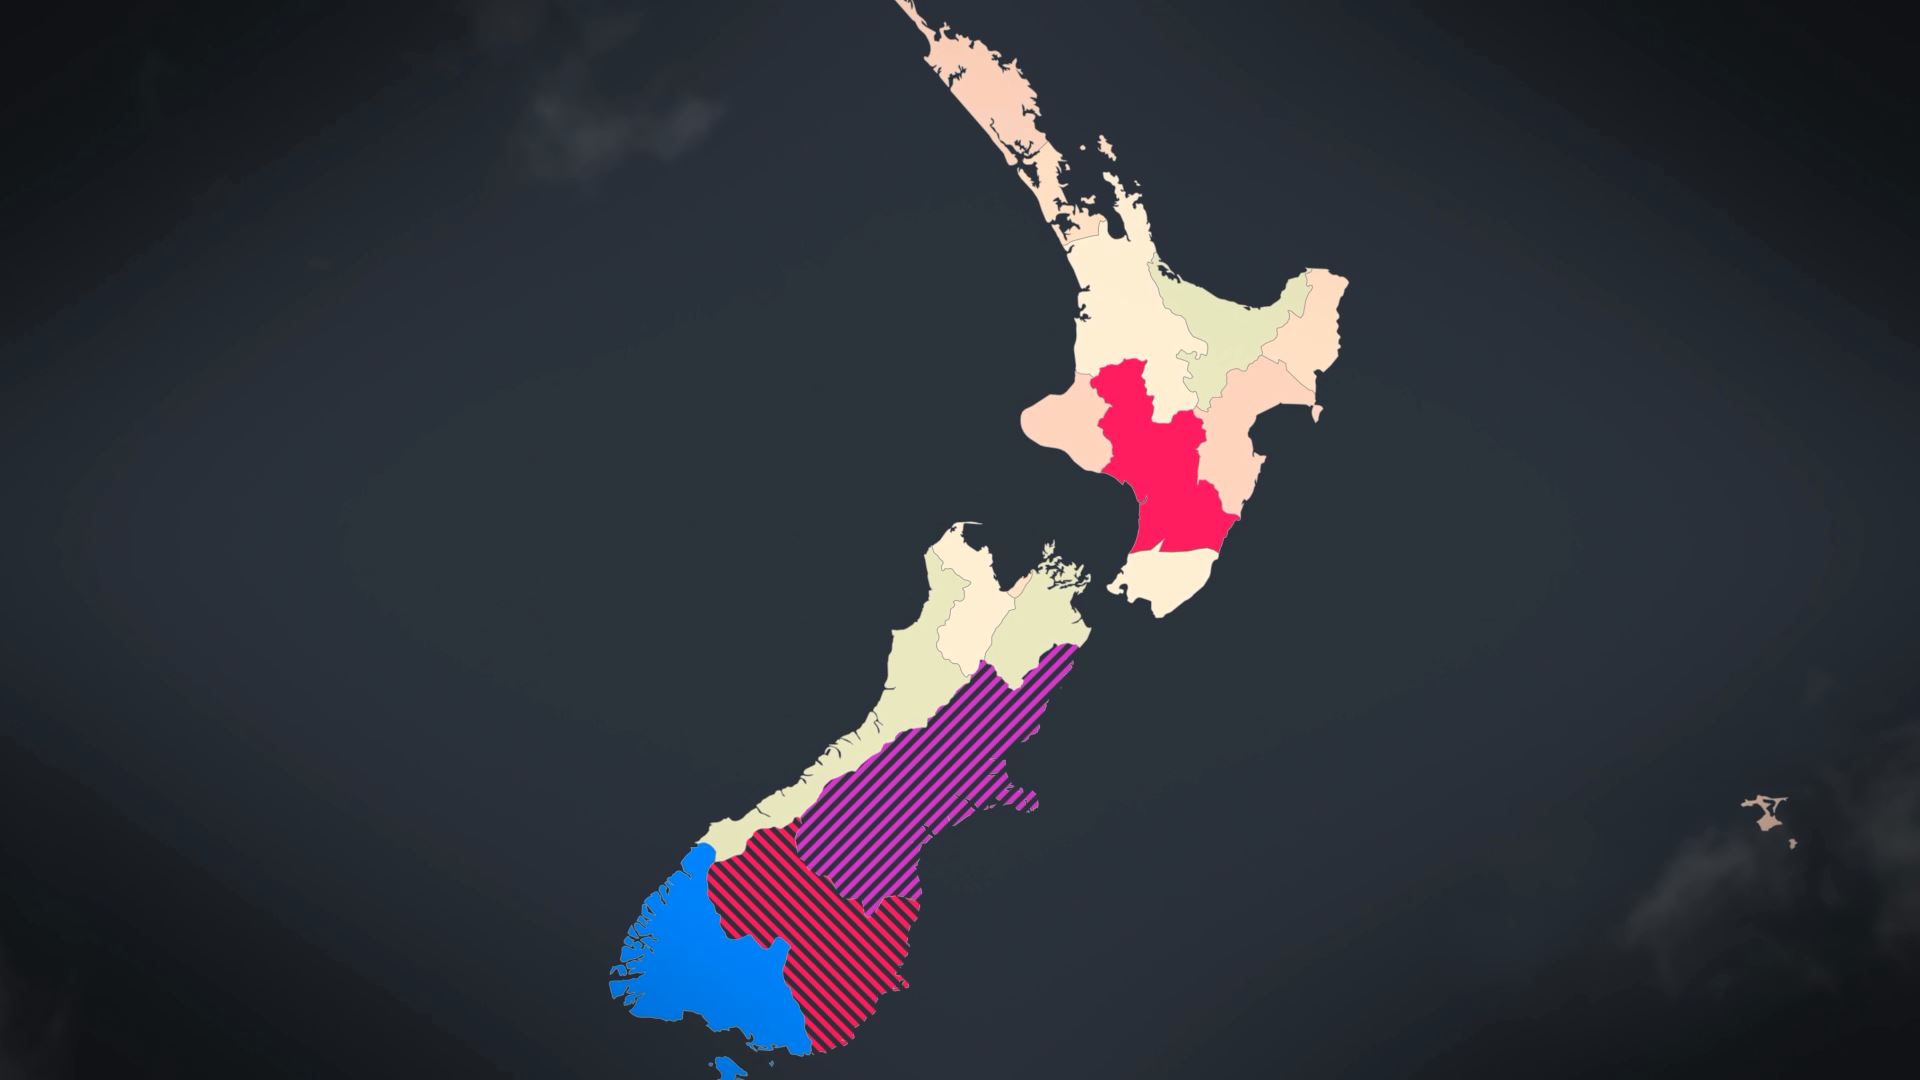  New Zealand Map - Aotearoa NZ New Zealand Map Kit 